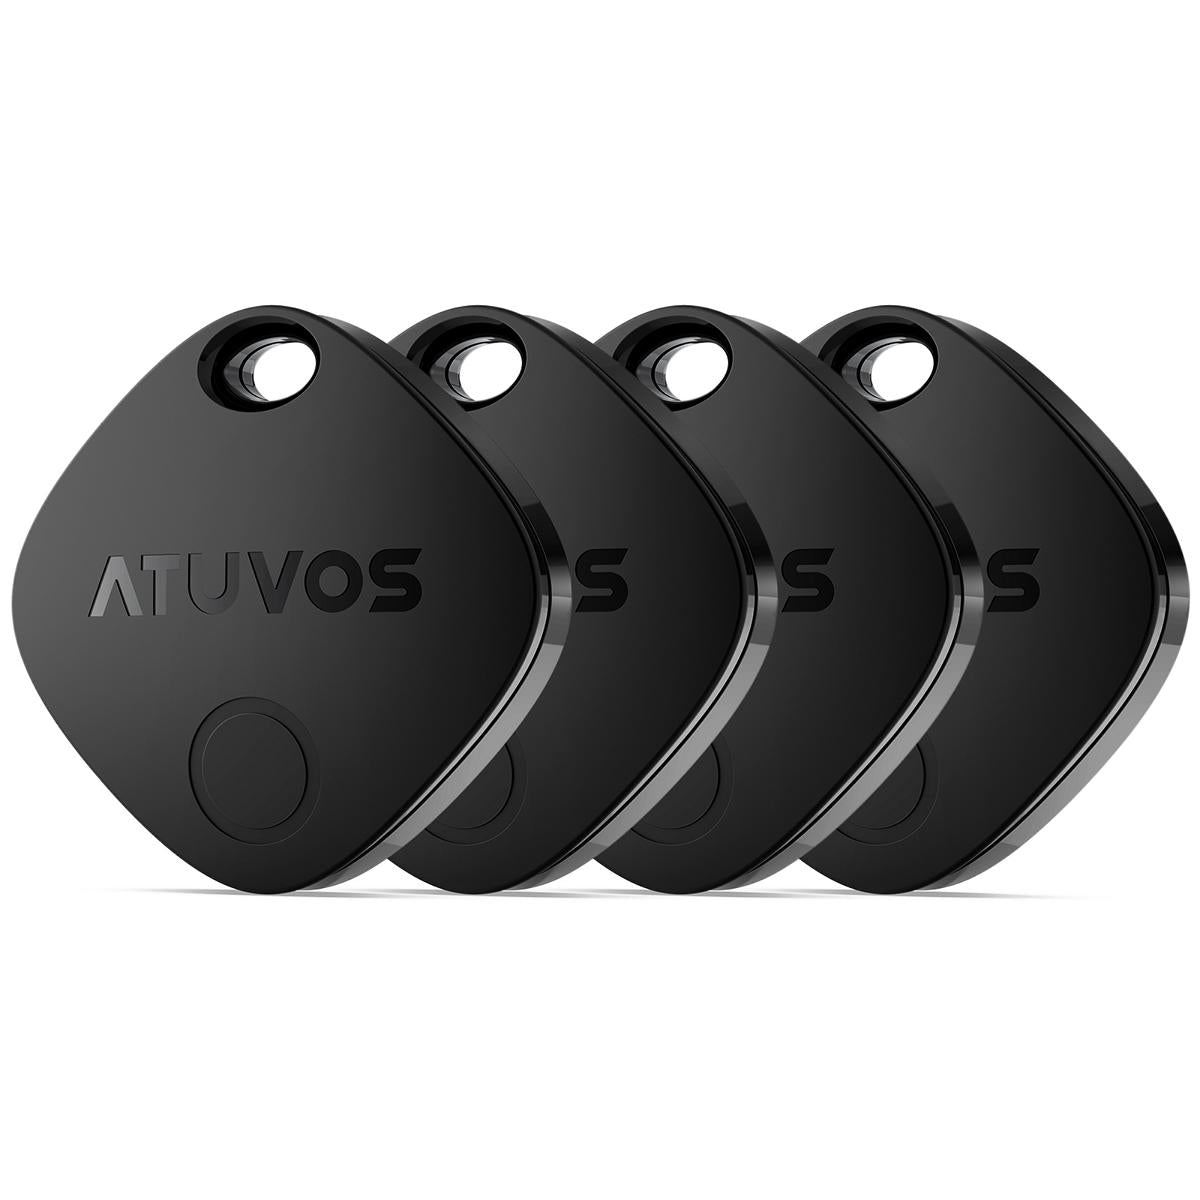 ATUVOS Black Item Finder 4 PCS (iOS Only)